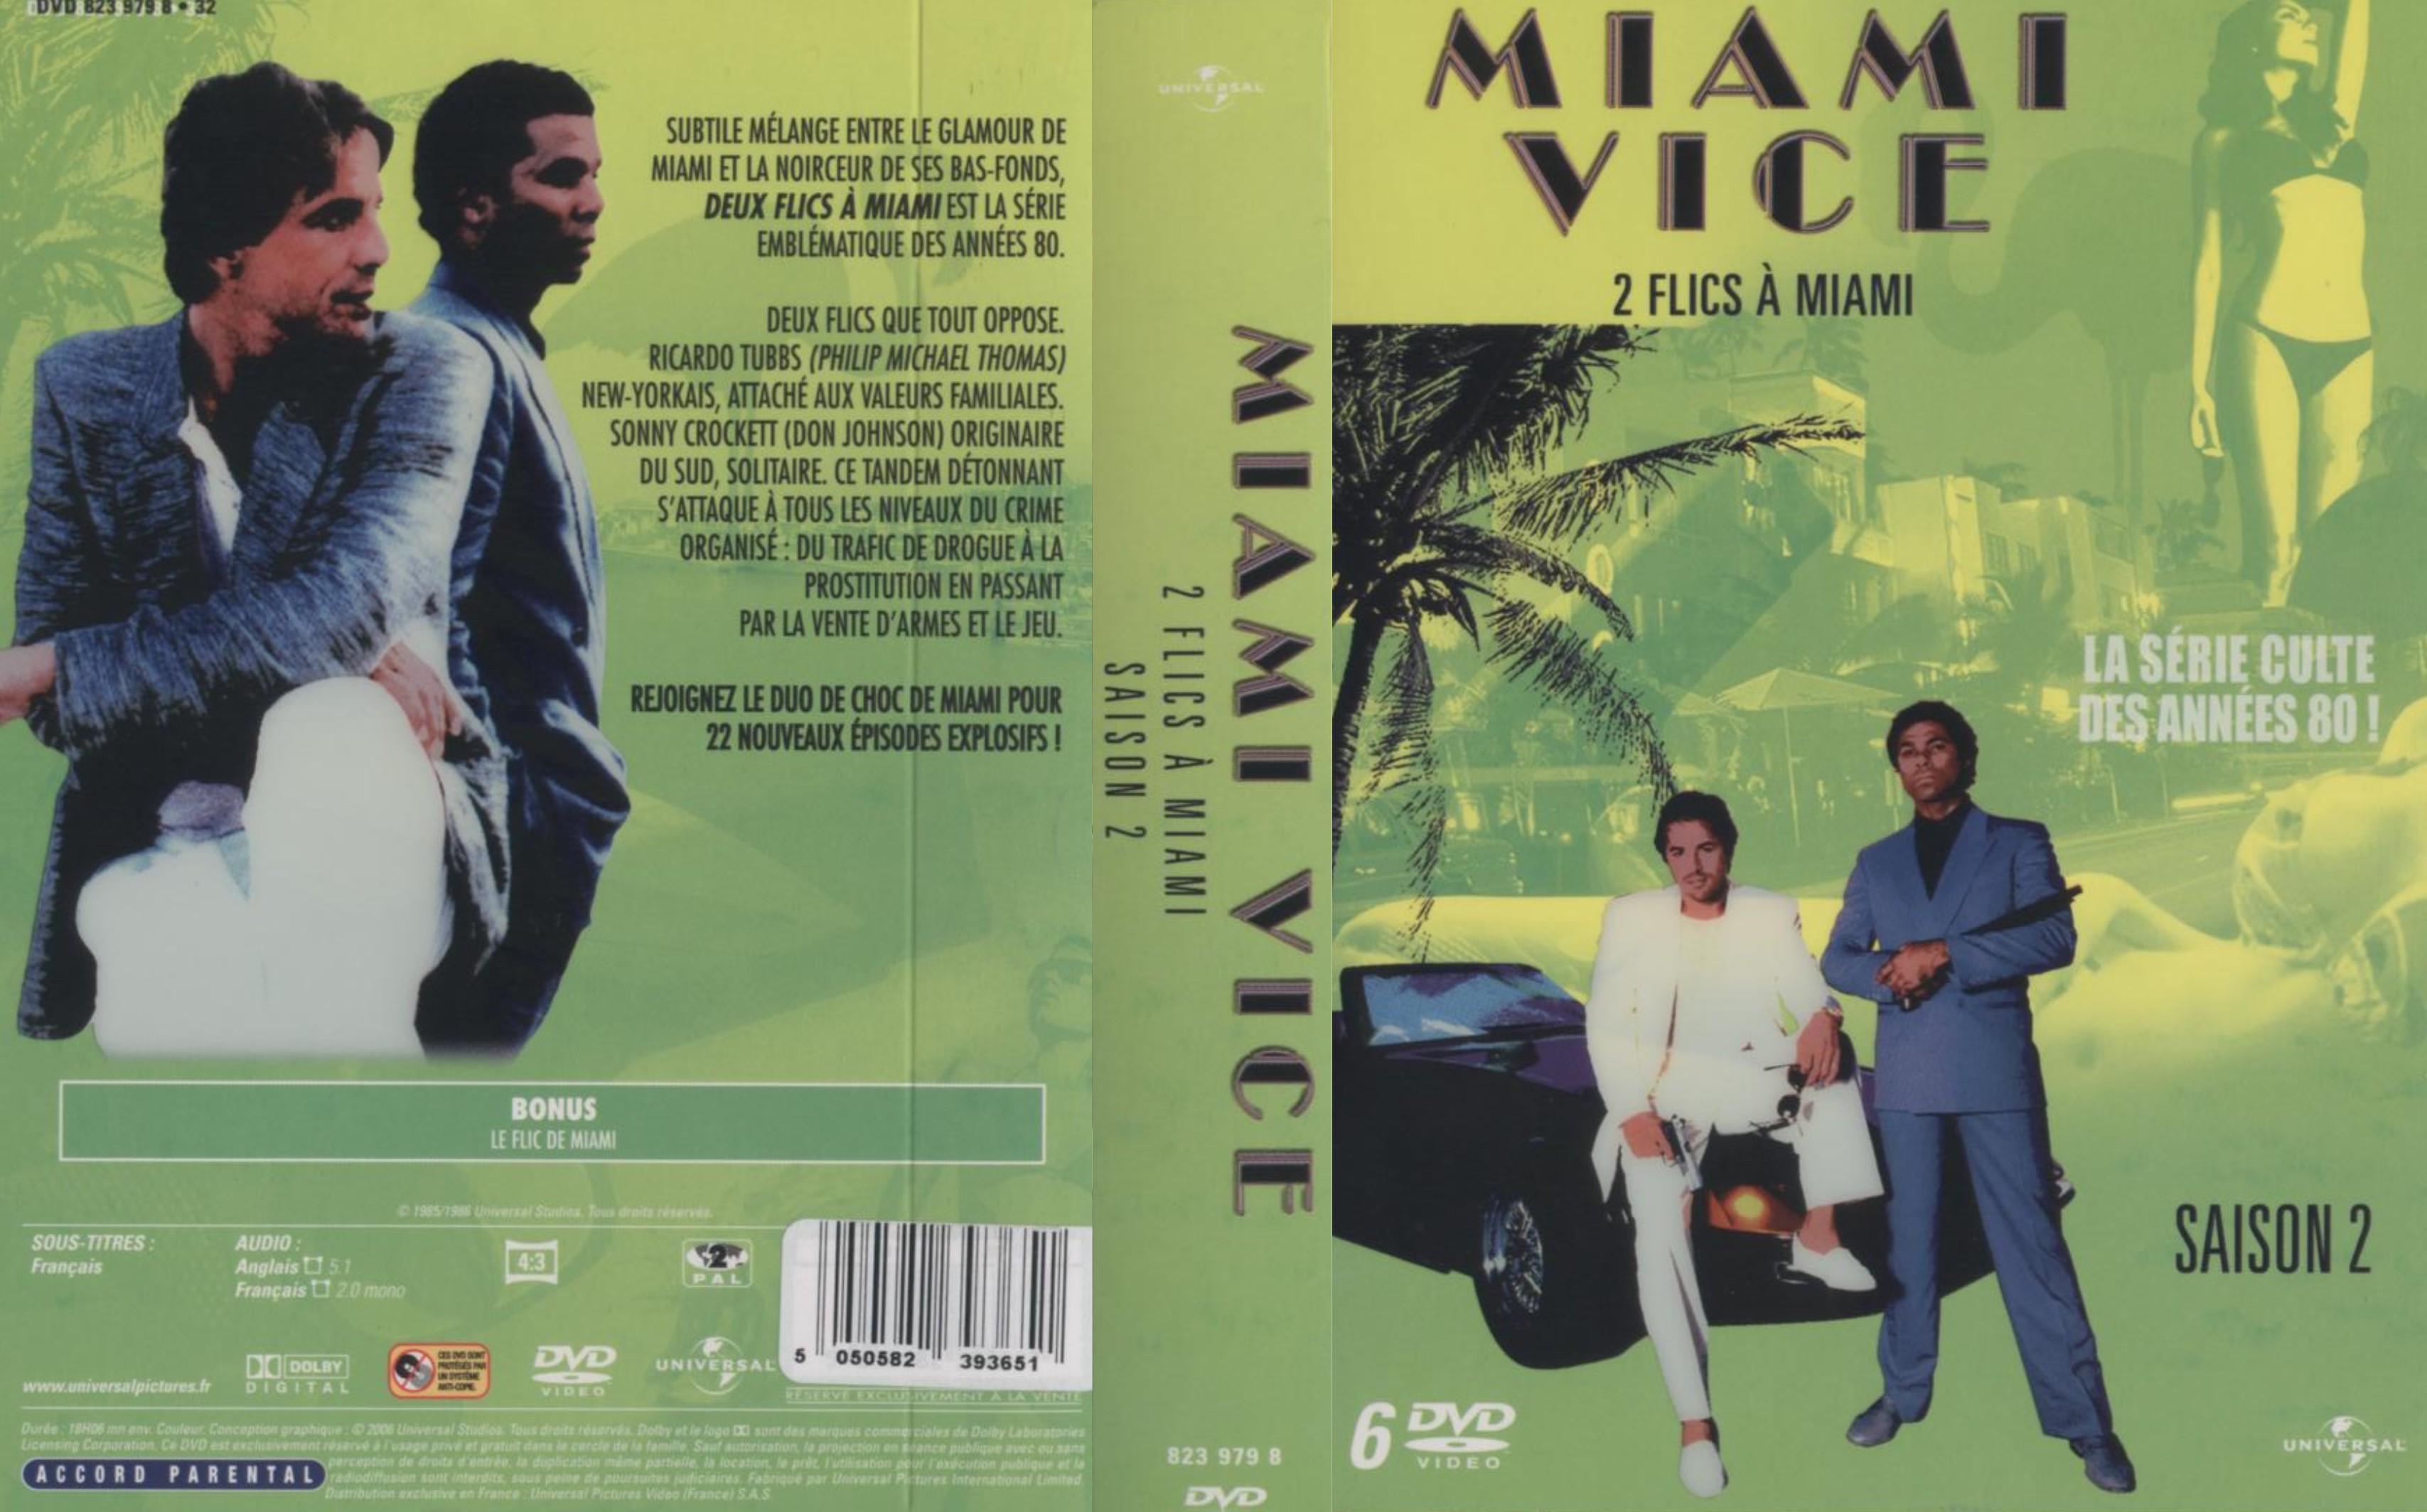 Jaquette DVD Miami vice Saison 2 COFFRET